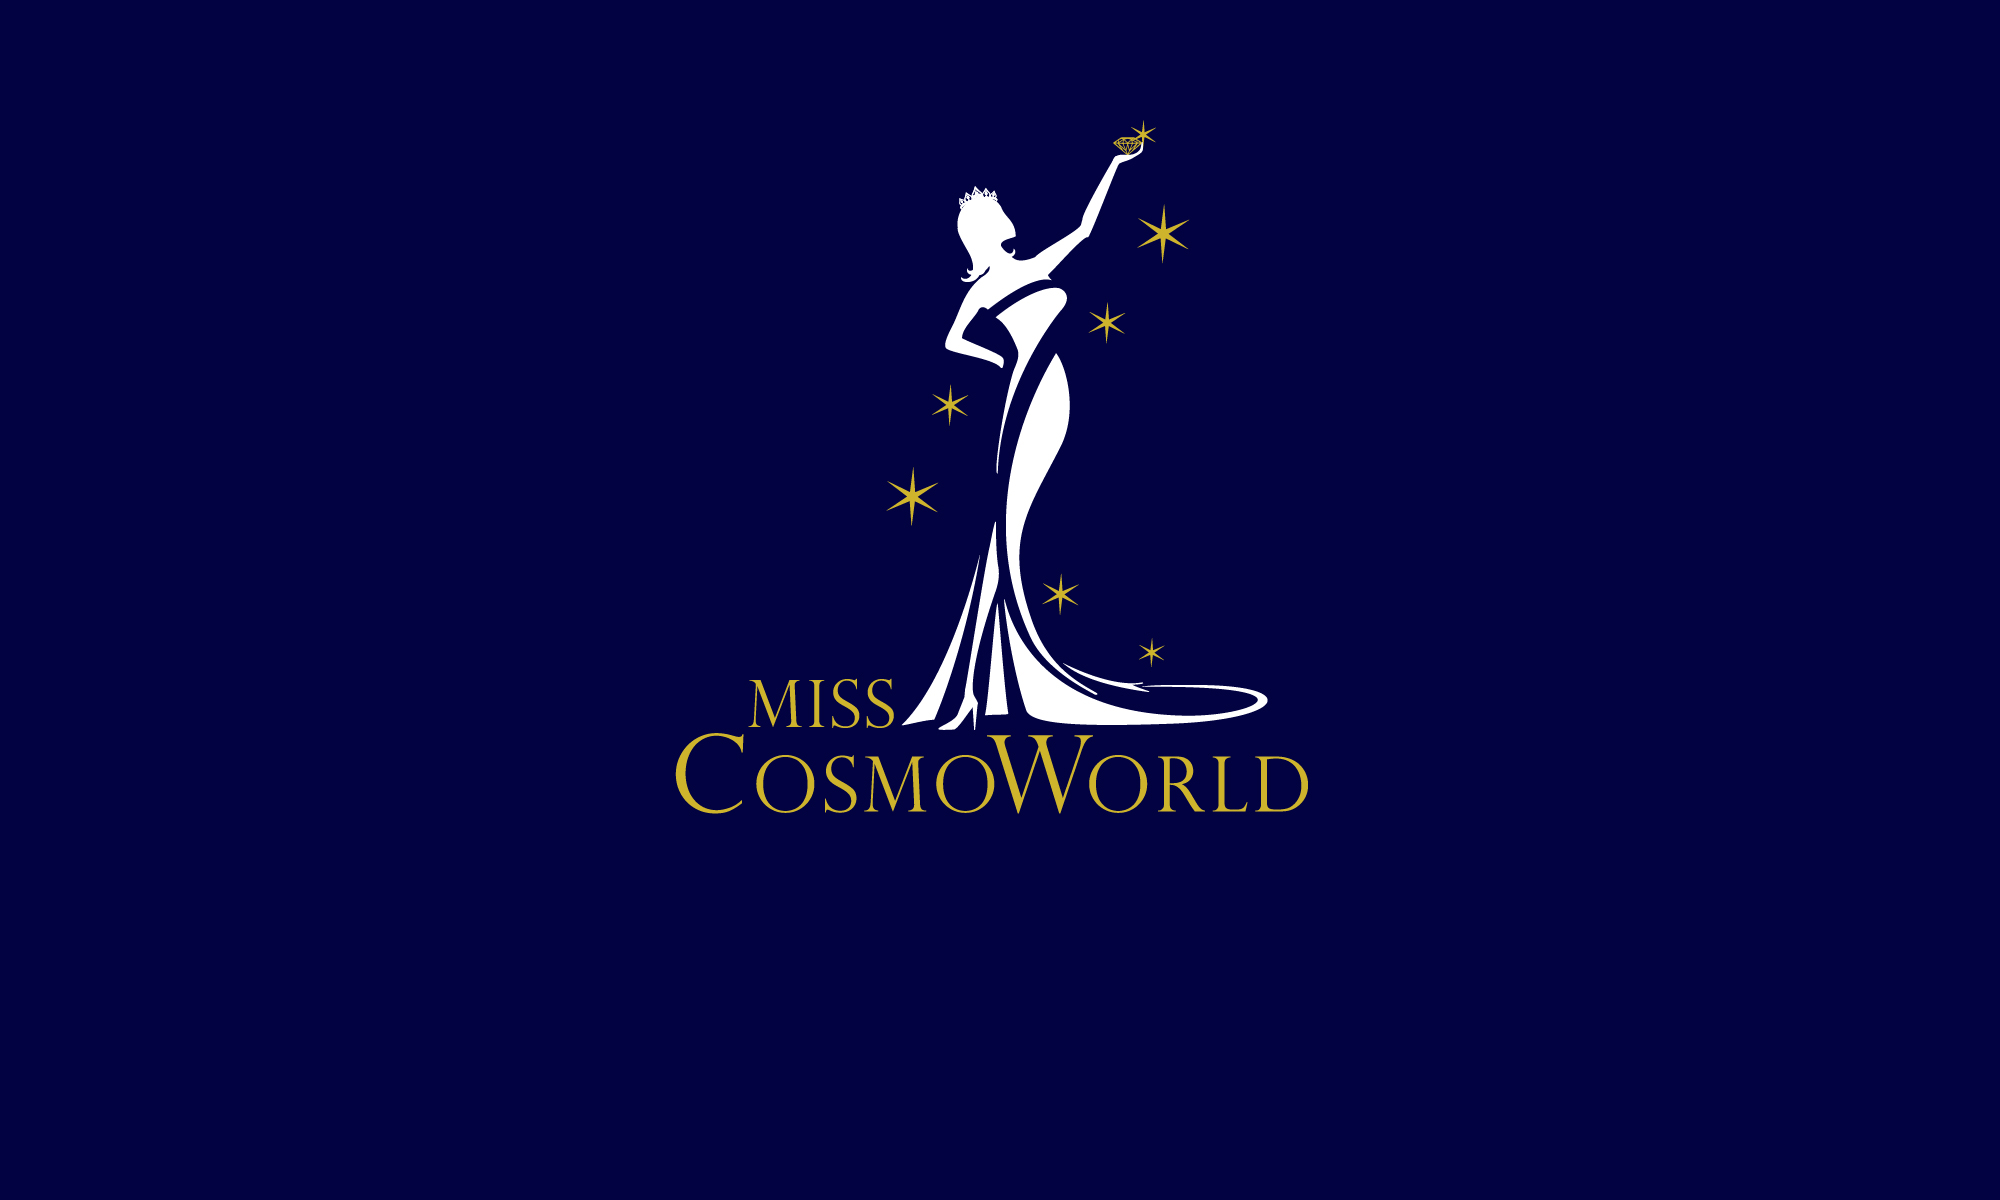 Miss CosmoWorld